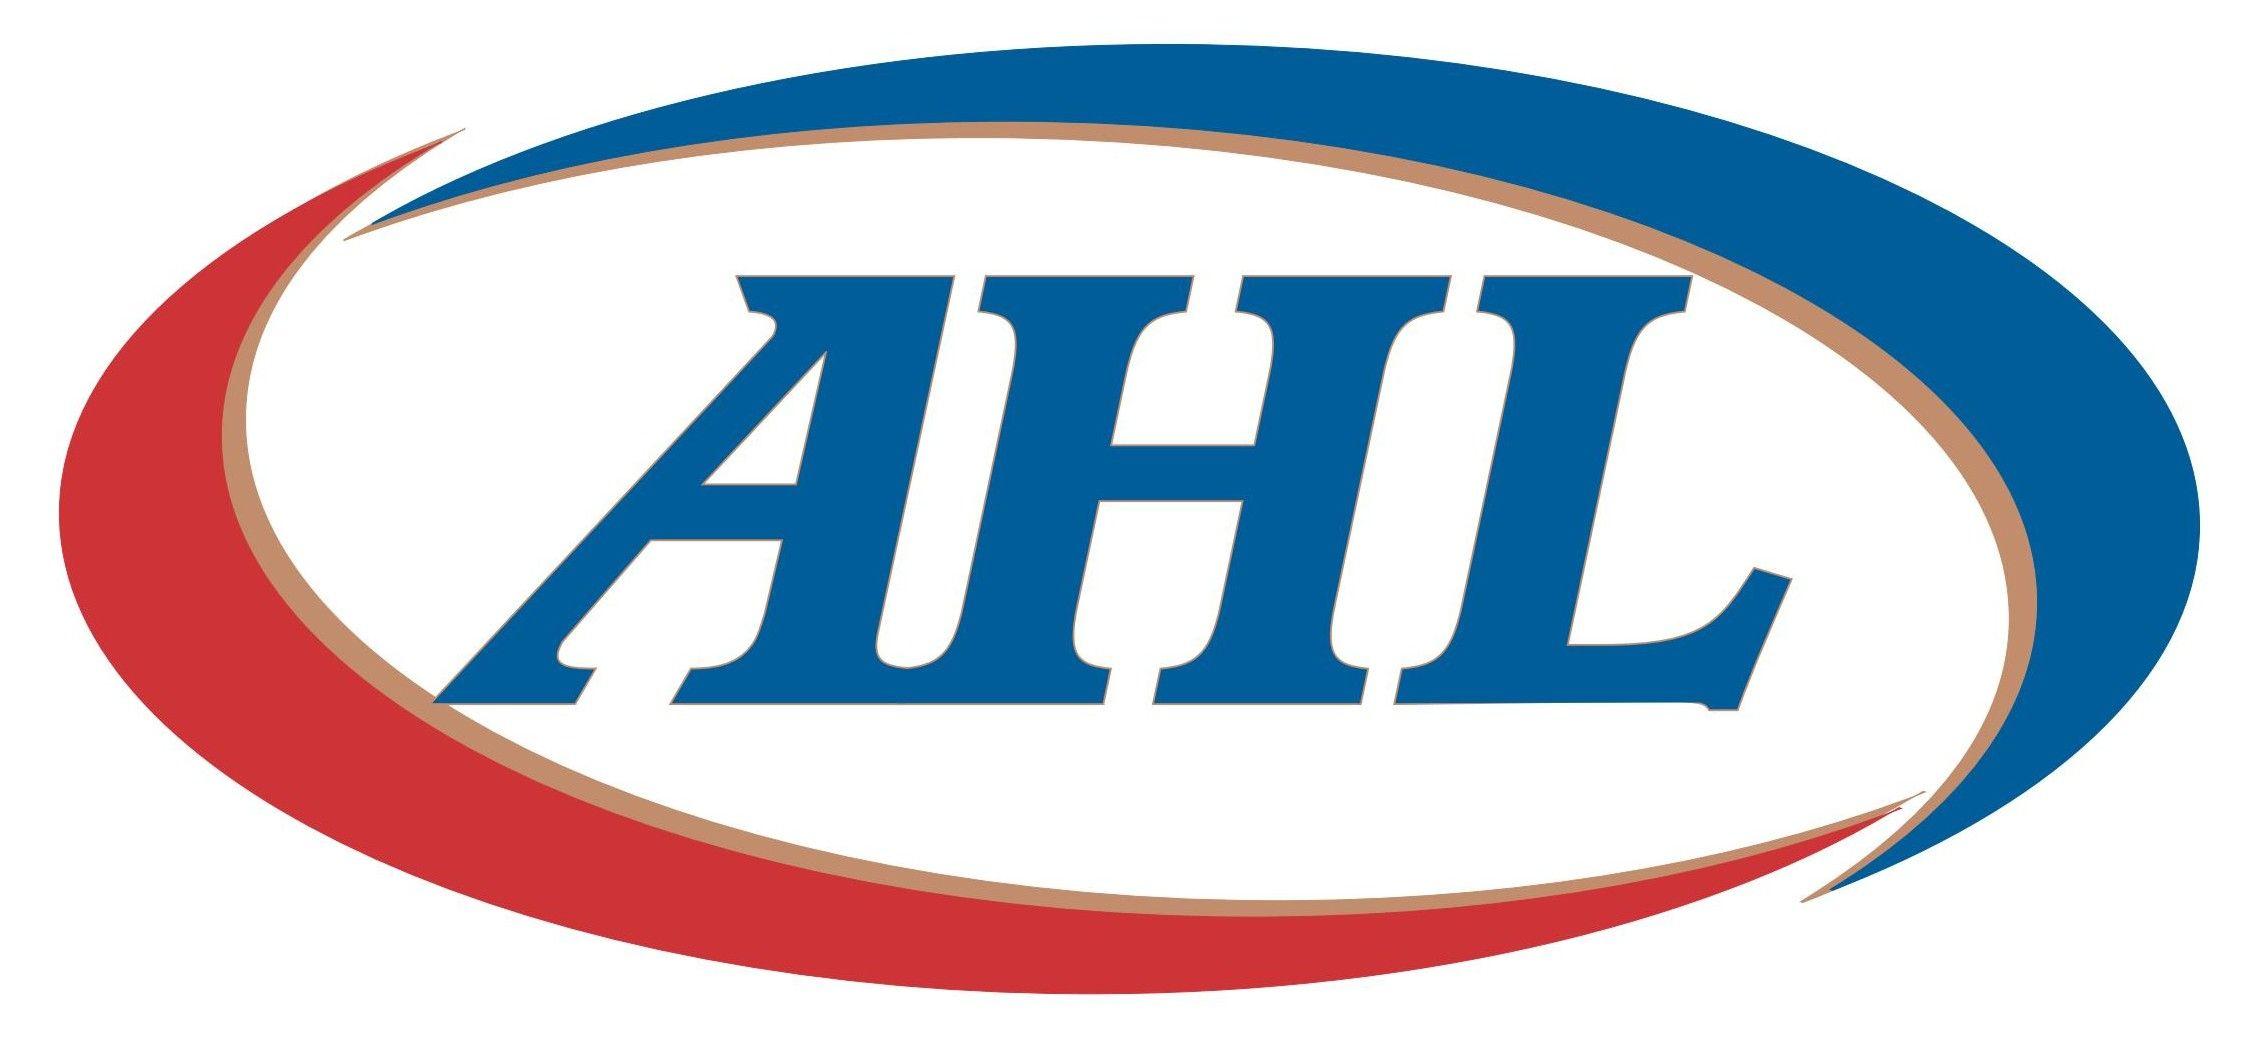 AHL Logo - AHL Logo [American Hockey League] Free Vector Download - FreeLogoVectors